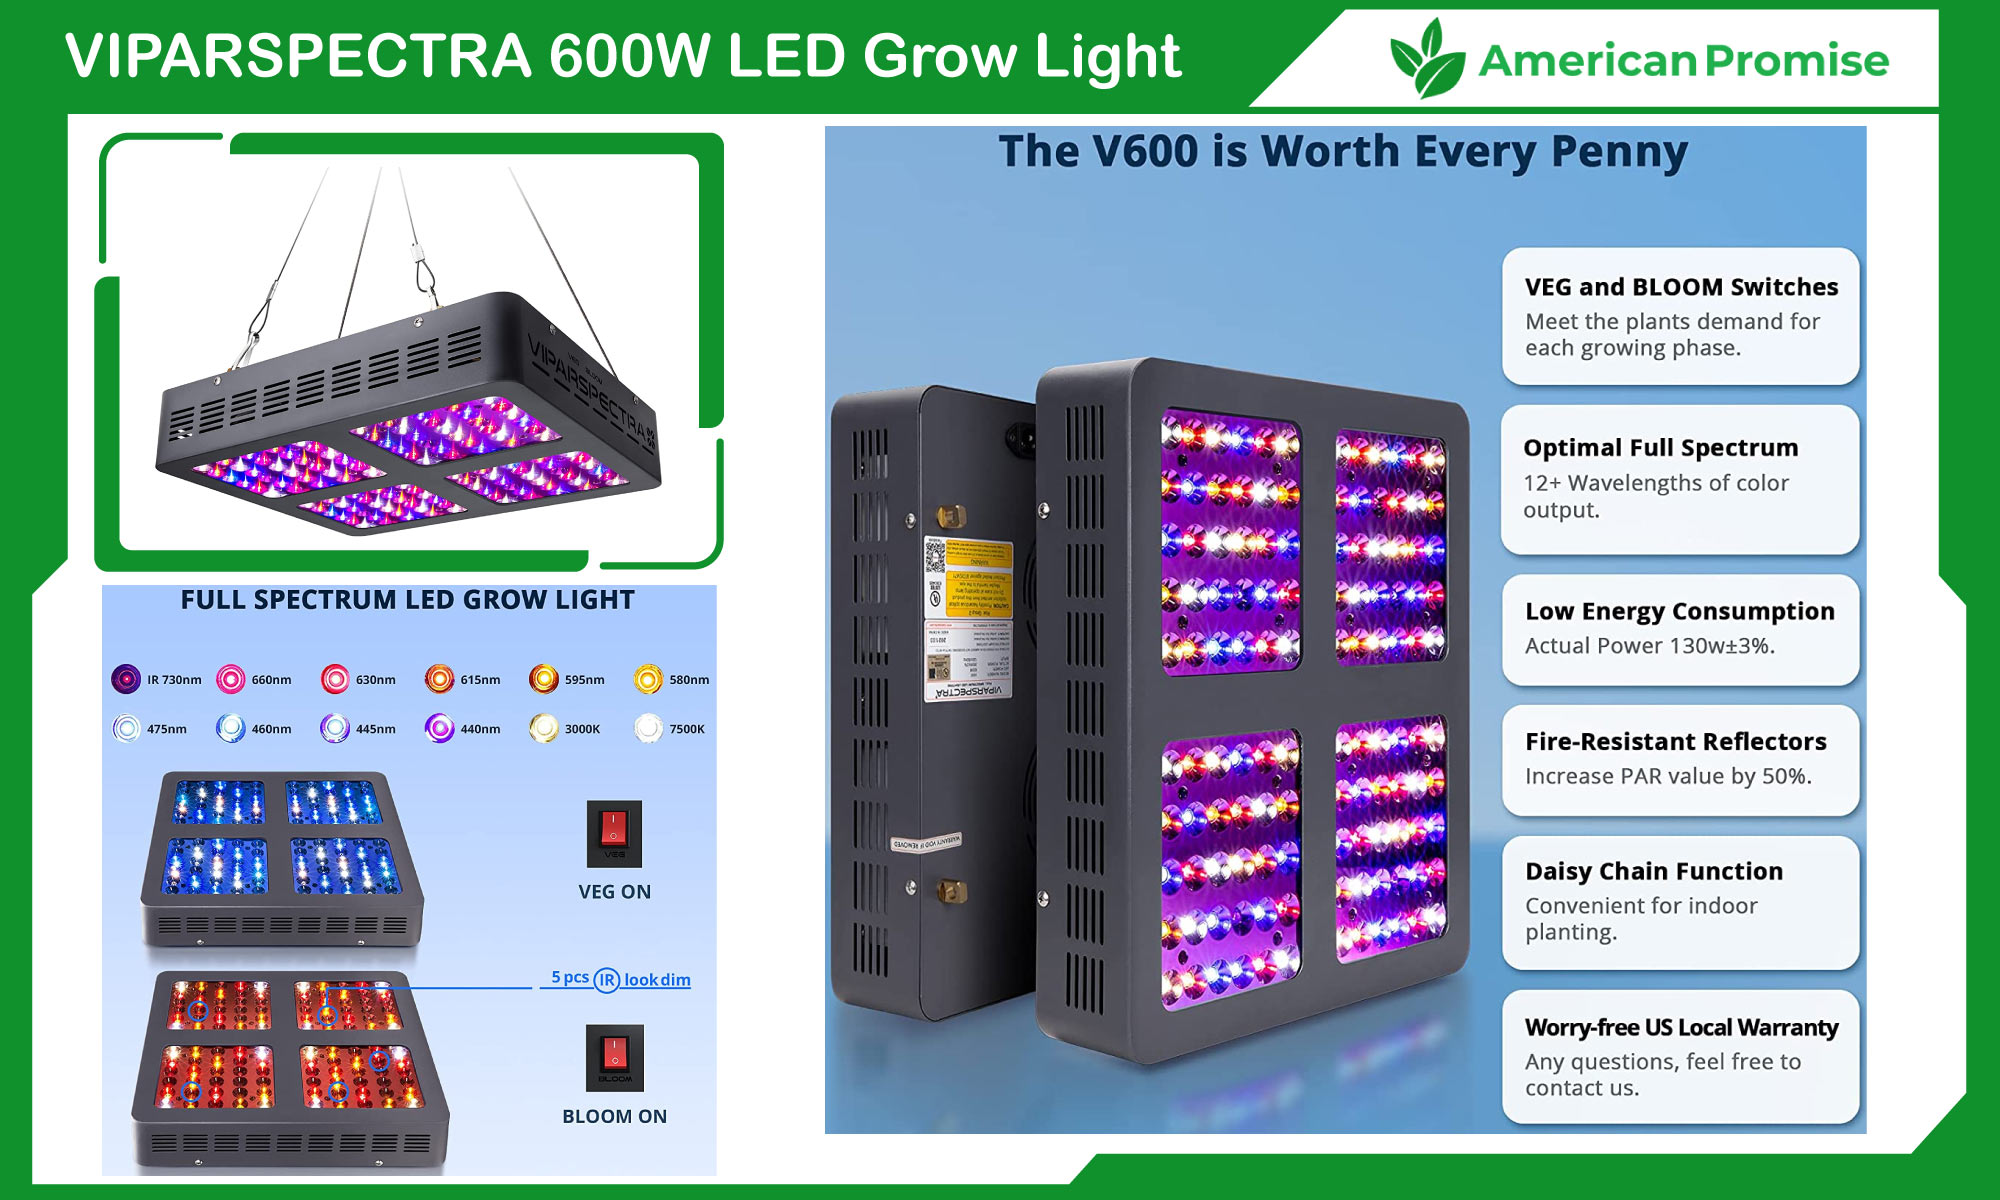 VIPARSPECTRA 600W LED Grow Light